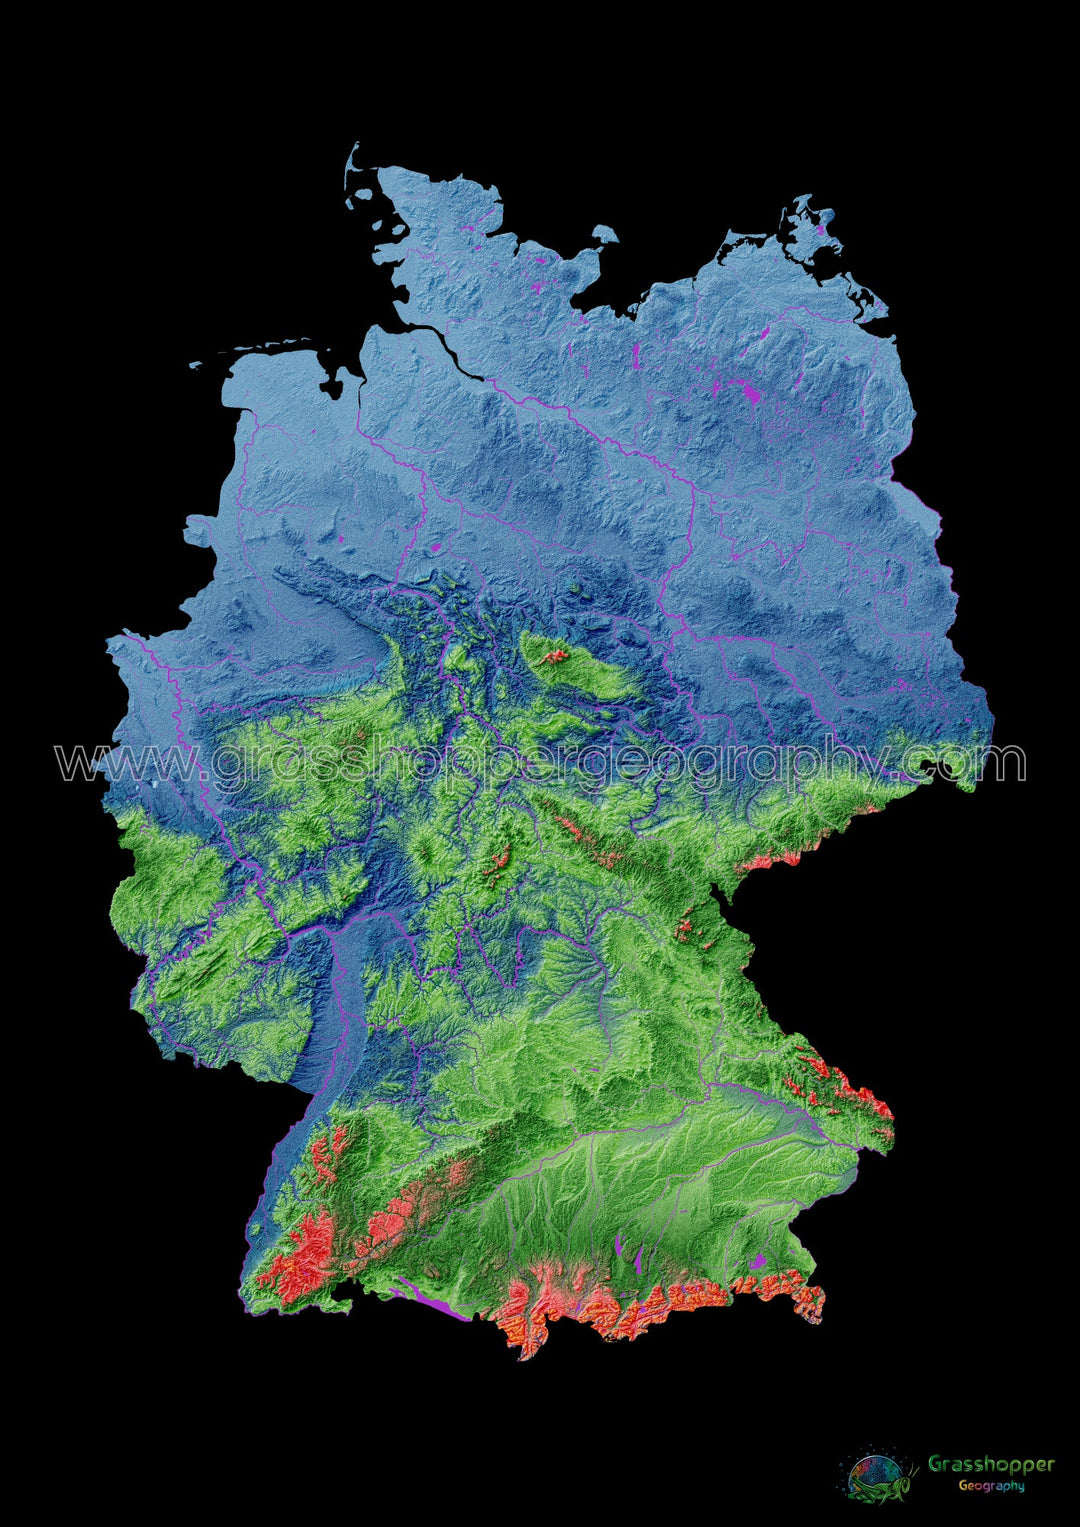 Germany - Elevation map, black - Fine Art Print